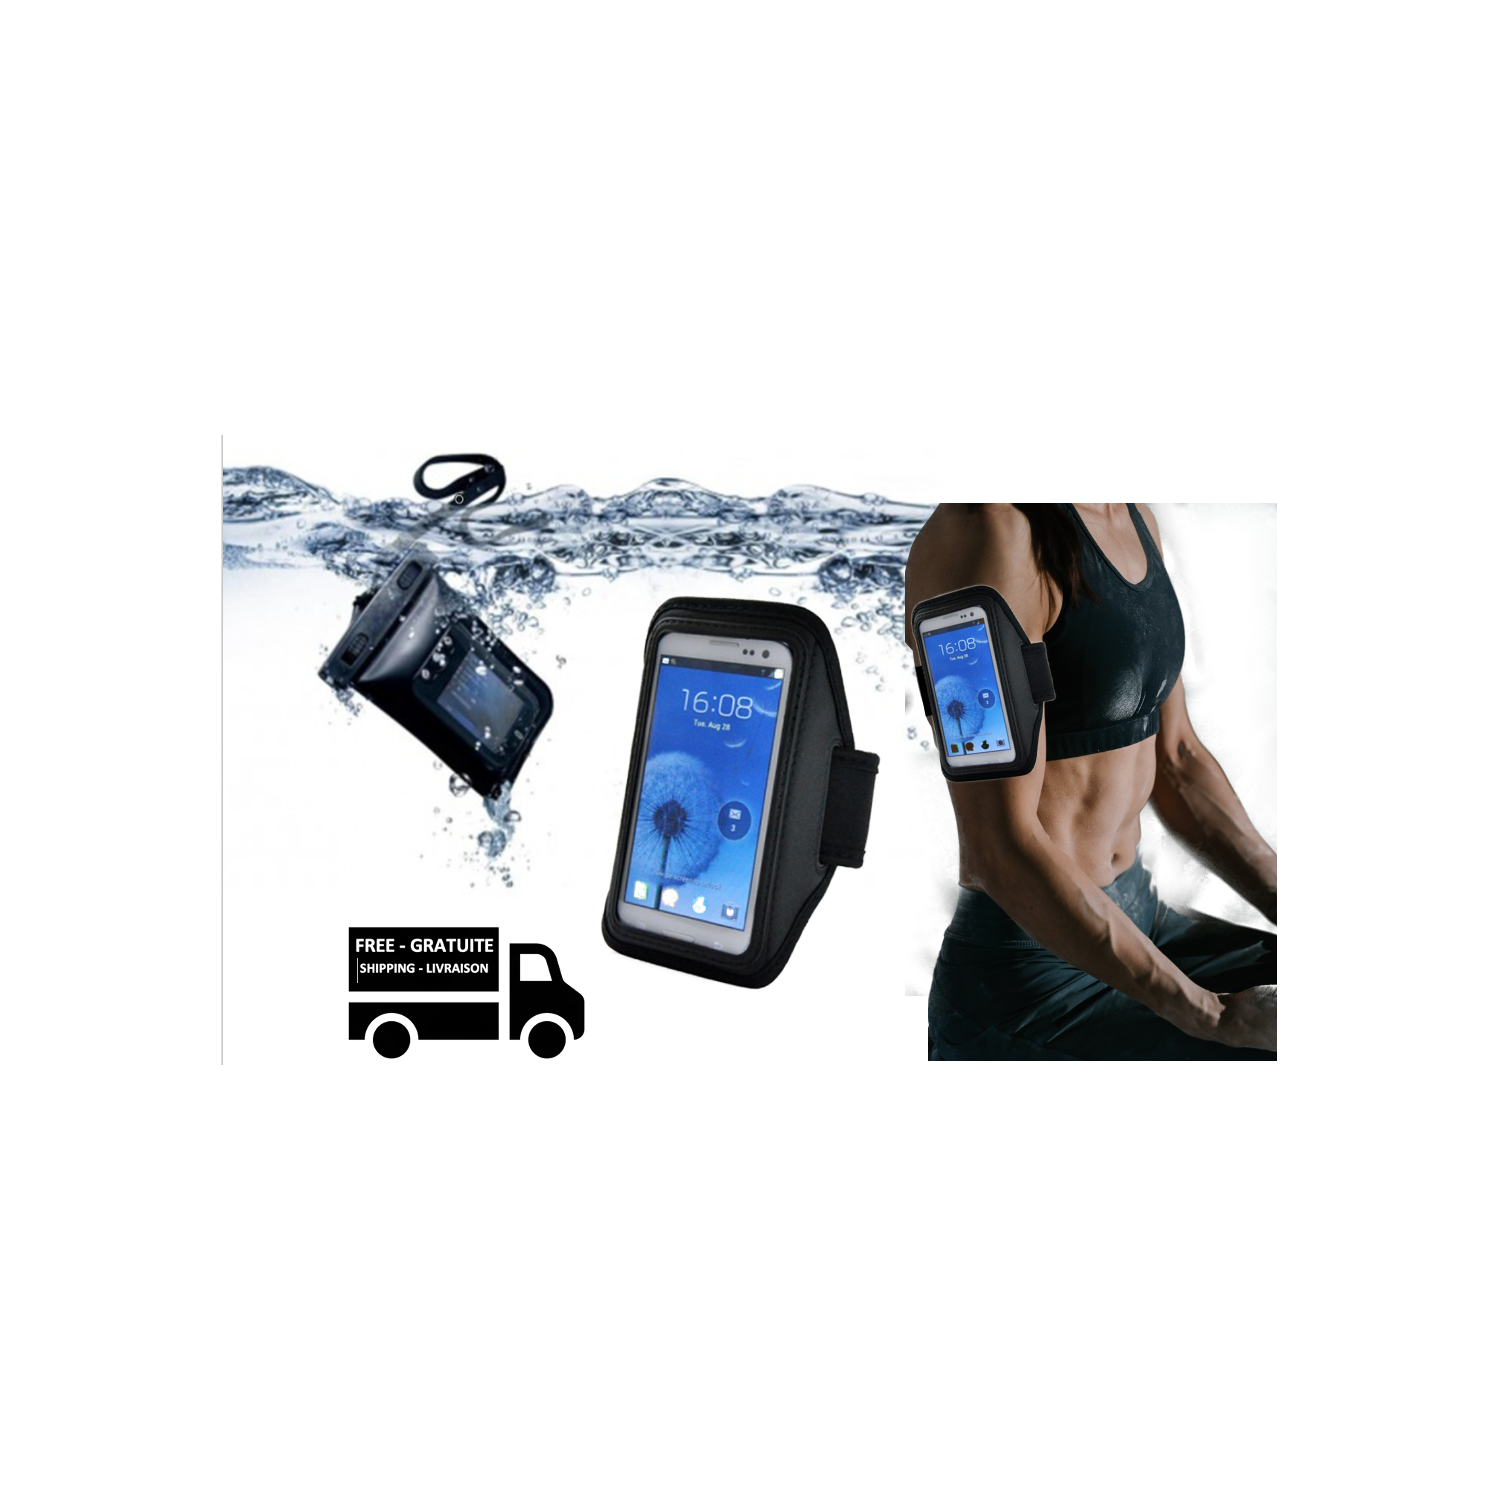 Stimula Lifestyle - DUO SET Apple Iphone Samsung Android Smartphone Armband & Waterproof Swim Beach Pool Case Holder Protection